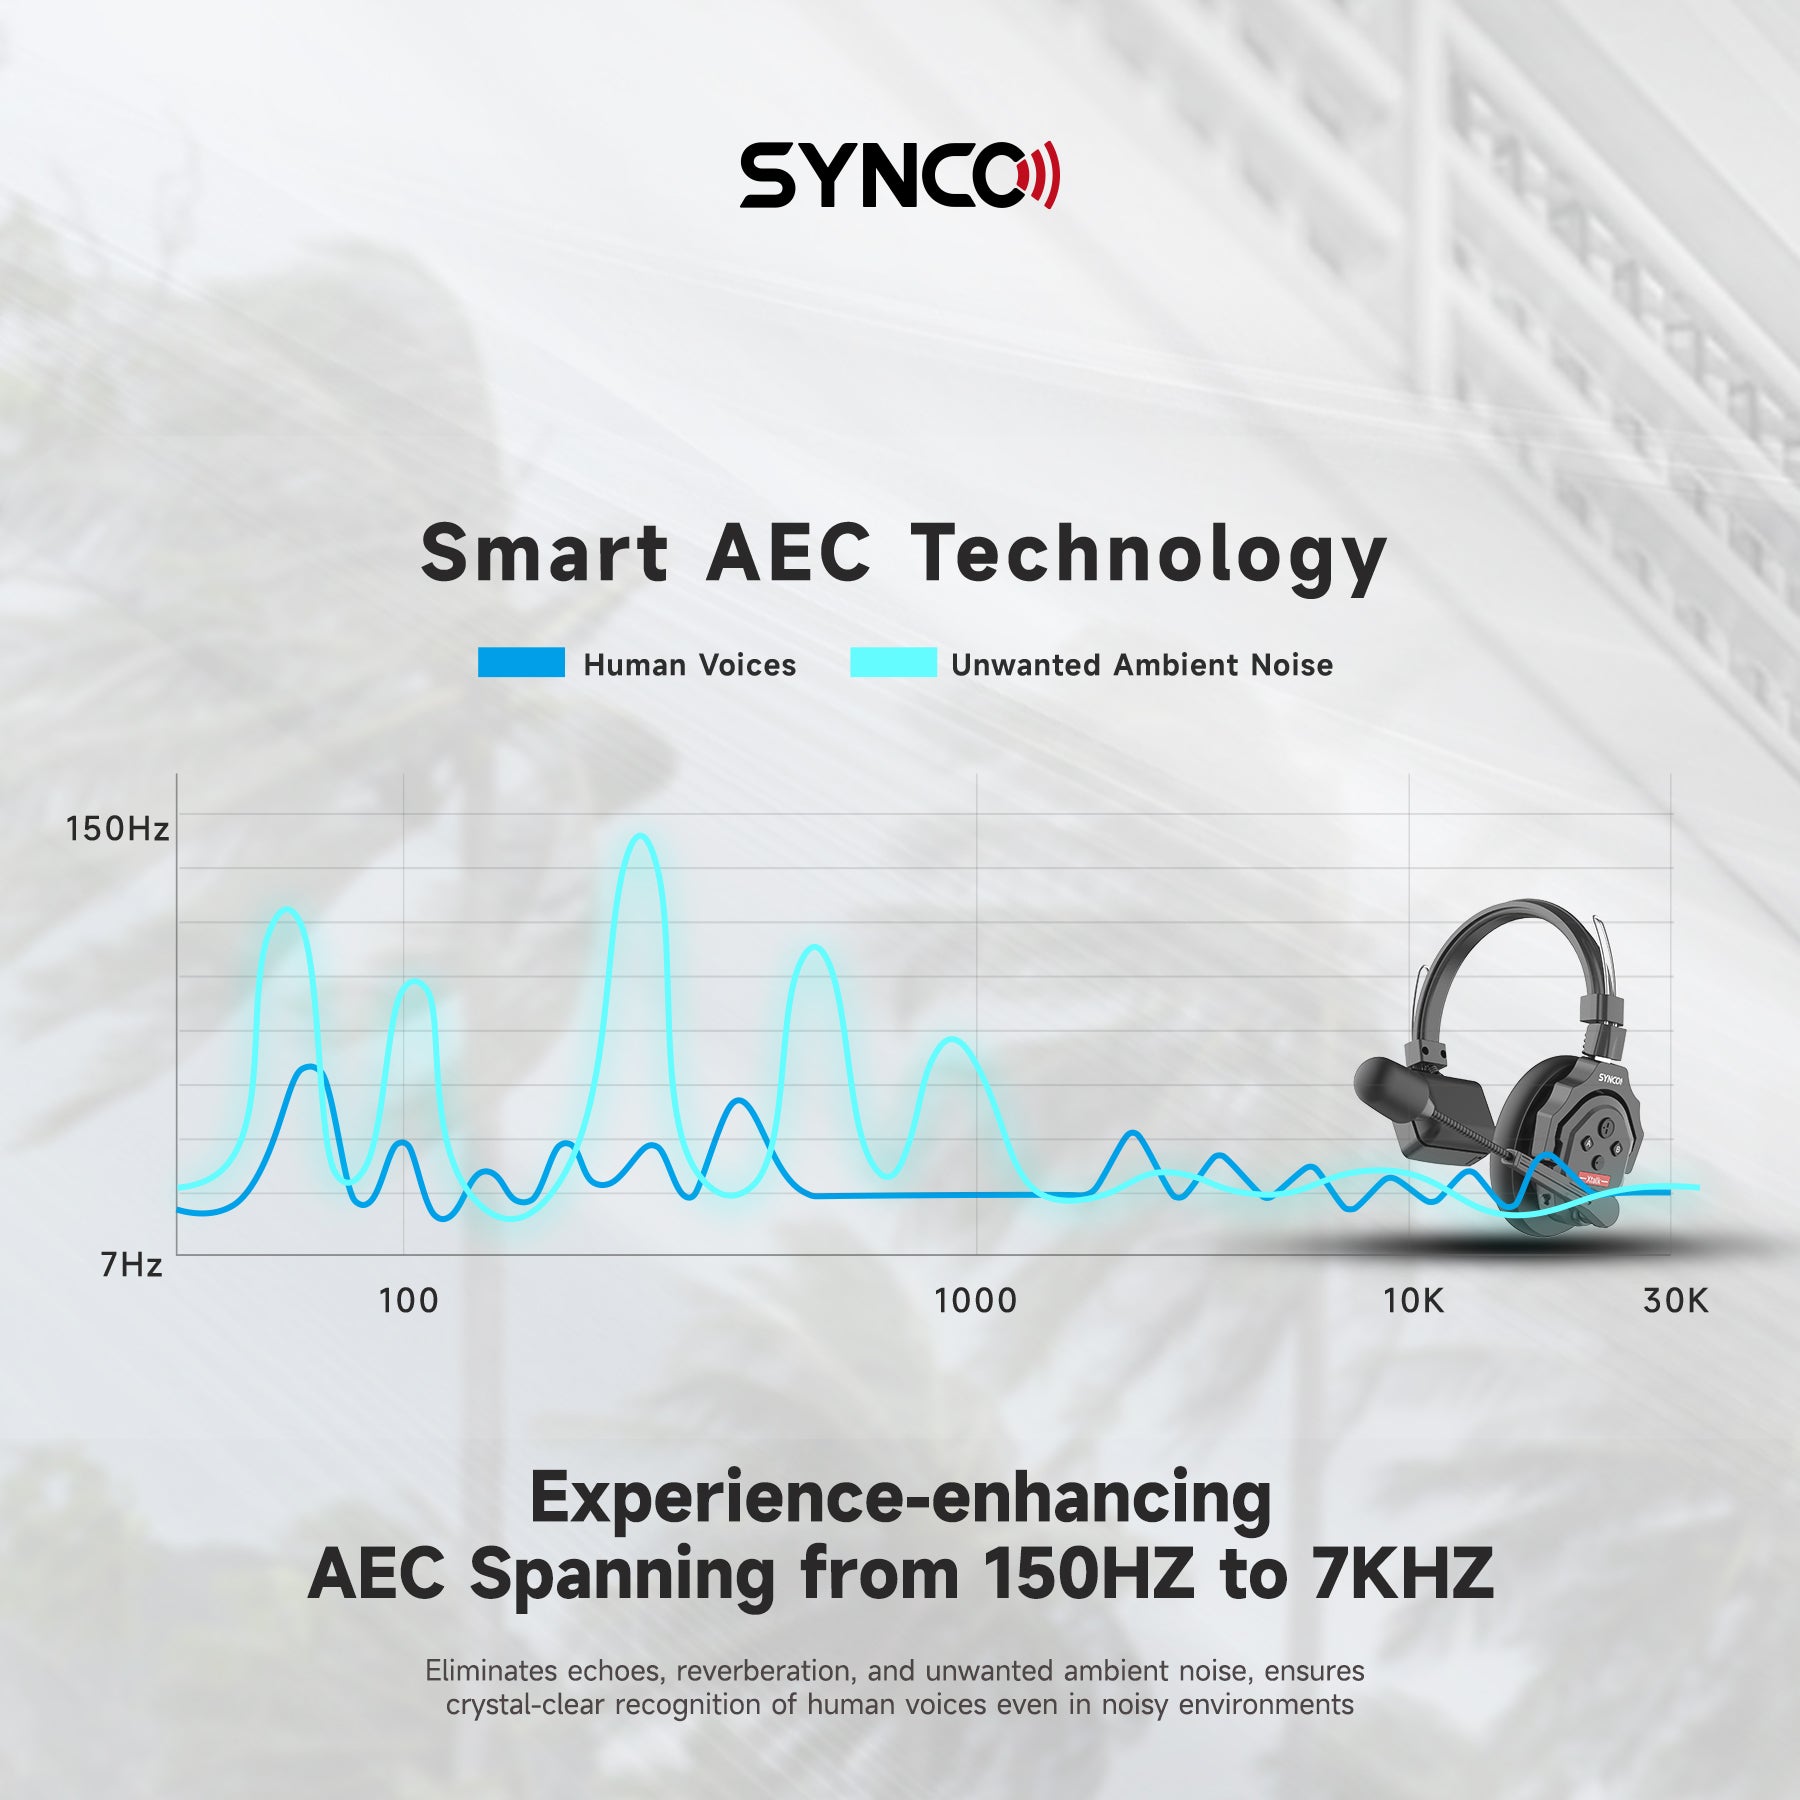 SYNCO XTalk 2.4GHz Wireless Intercom Headset System for Filmmaking